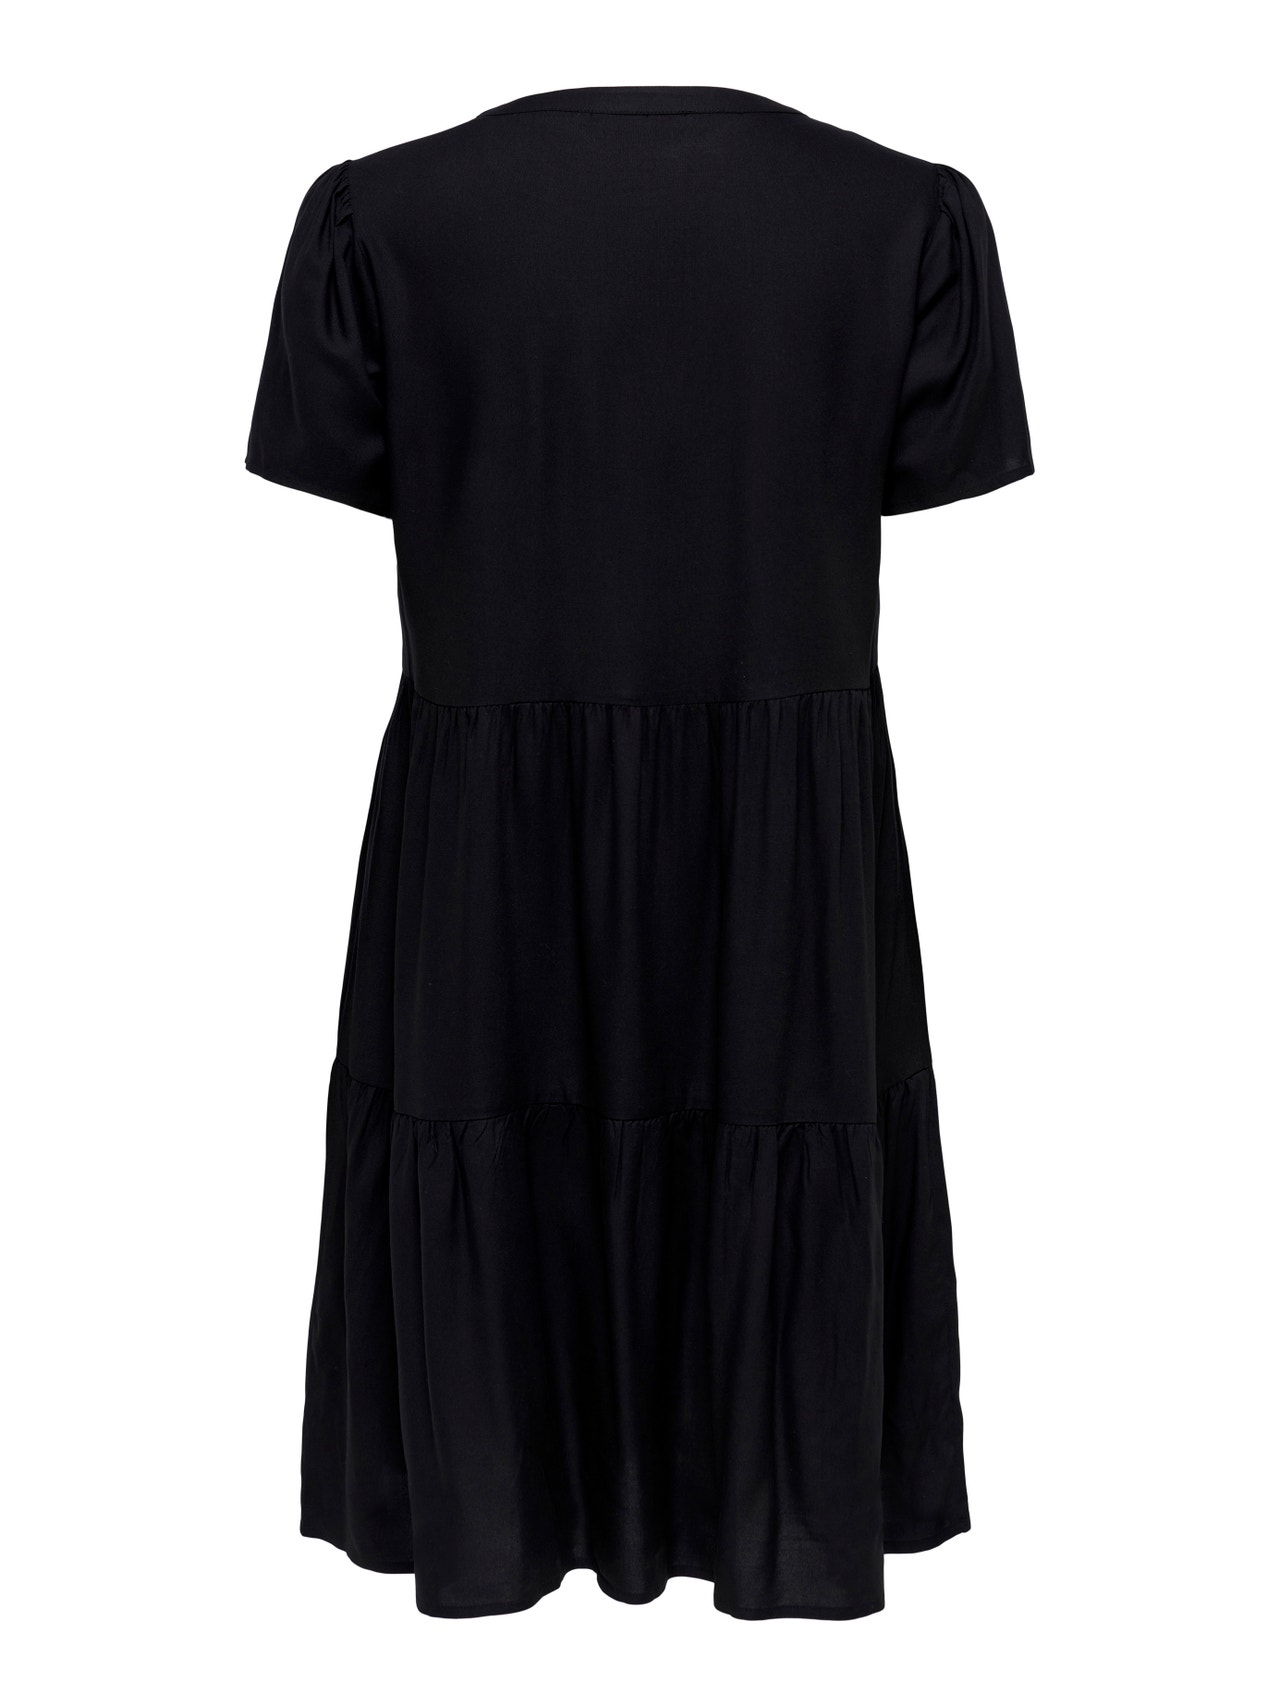 ONLY V-neck Short sleeved dress -Black - 15262674